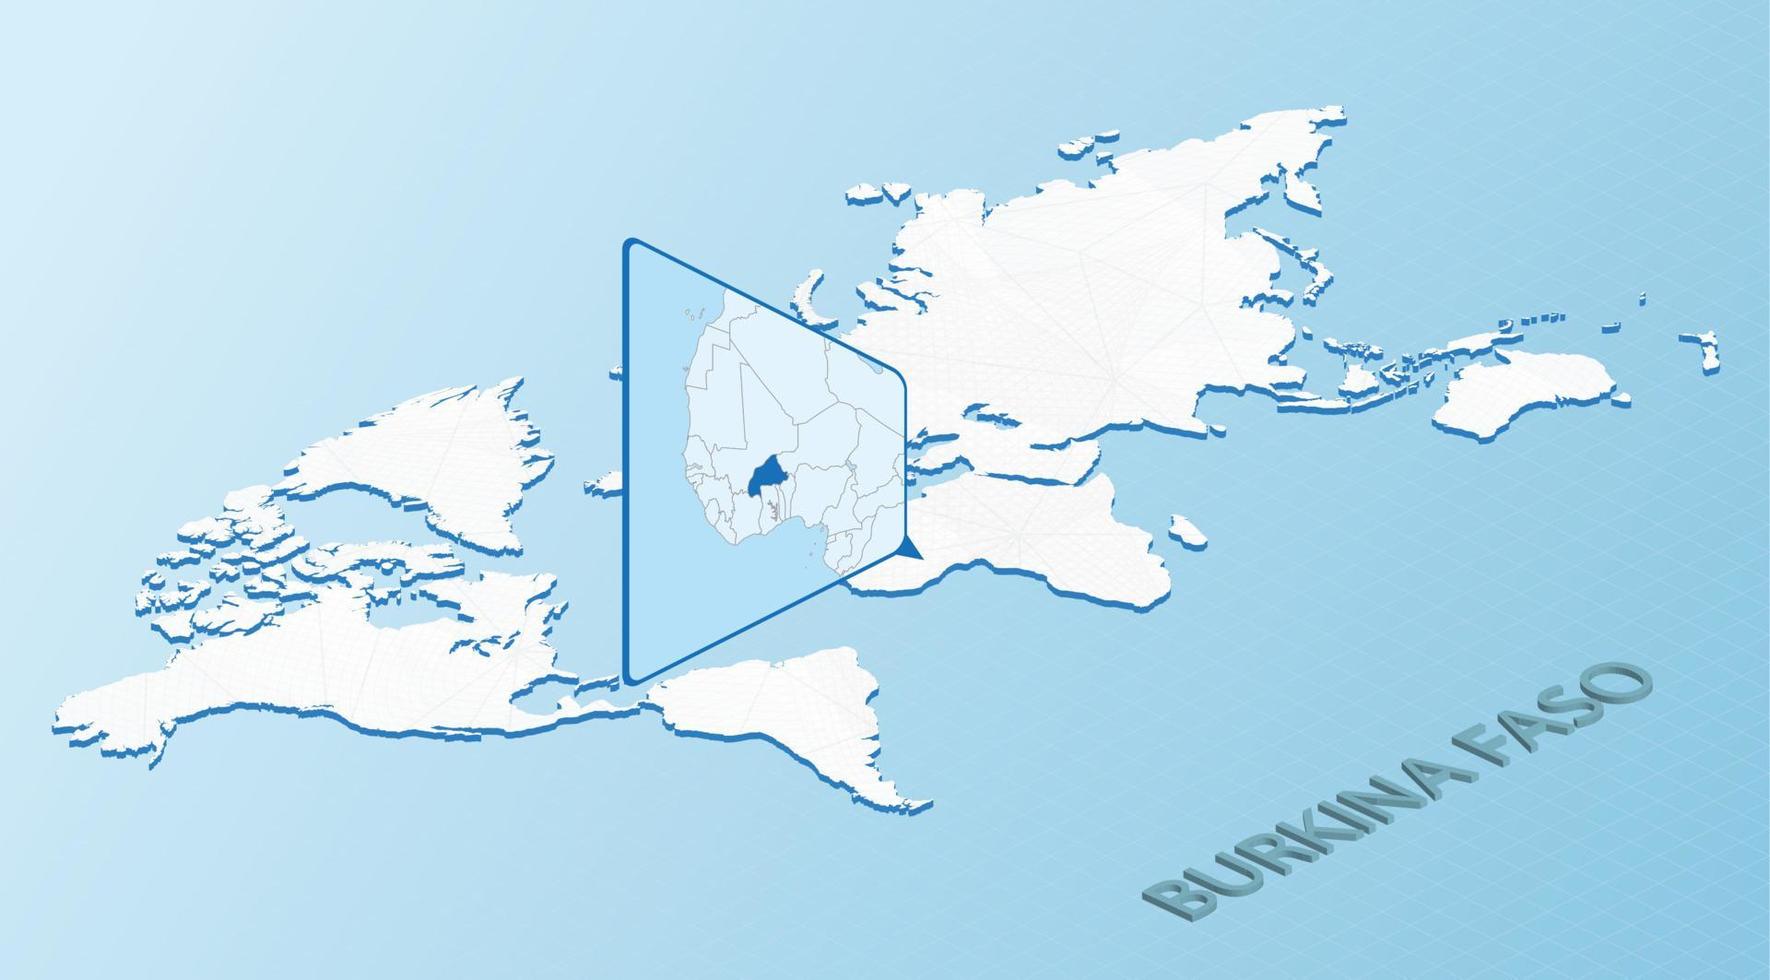 mapa mundial en estilo isométrico con mapa detallado de burkina faso. mapa azul claro de burkina faso con mapa del mundo abstracto. vector